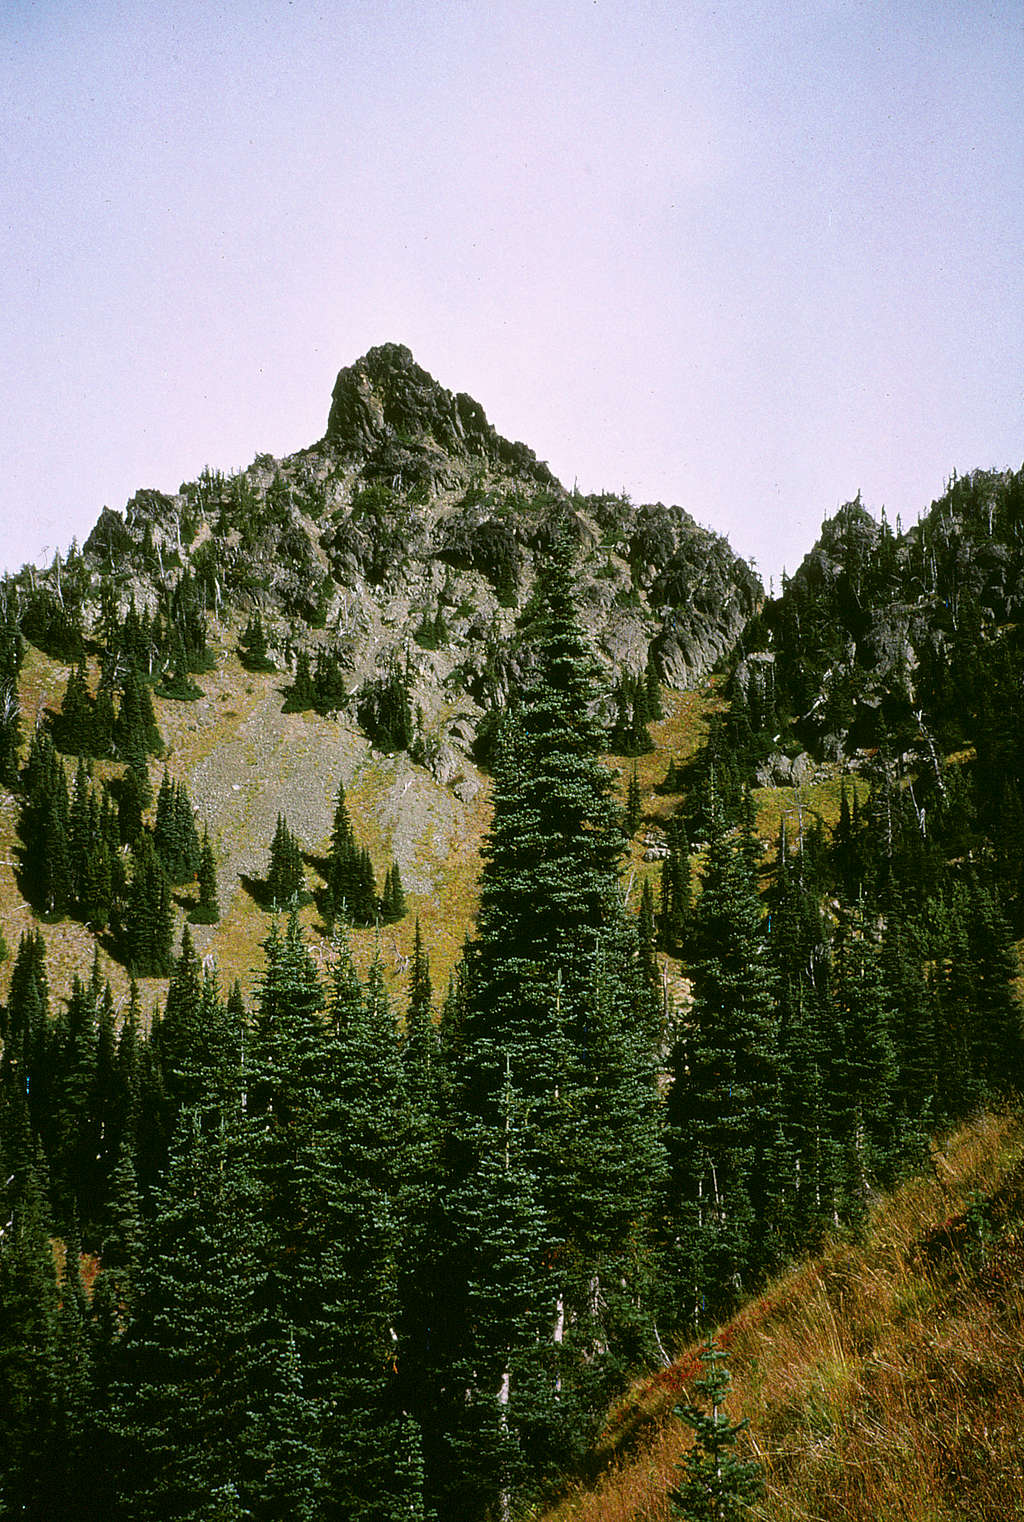 Threeway Peak from the west